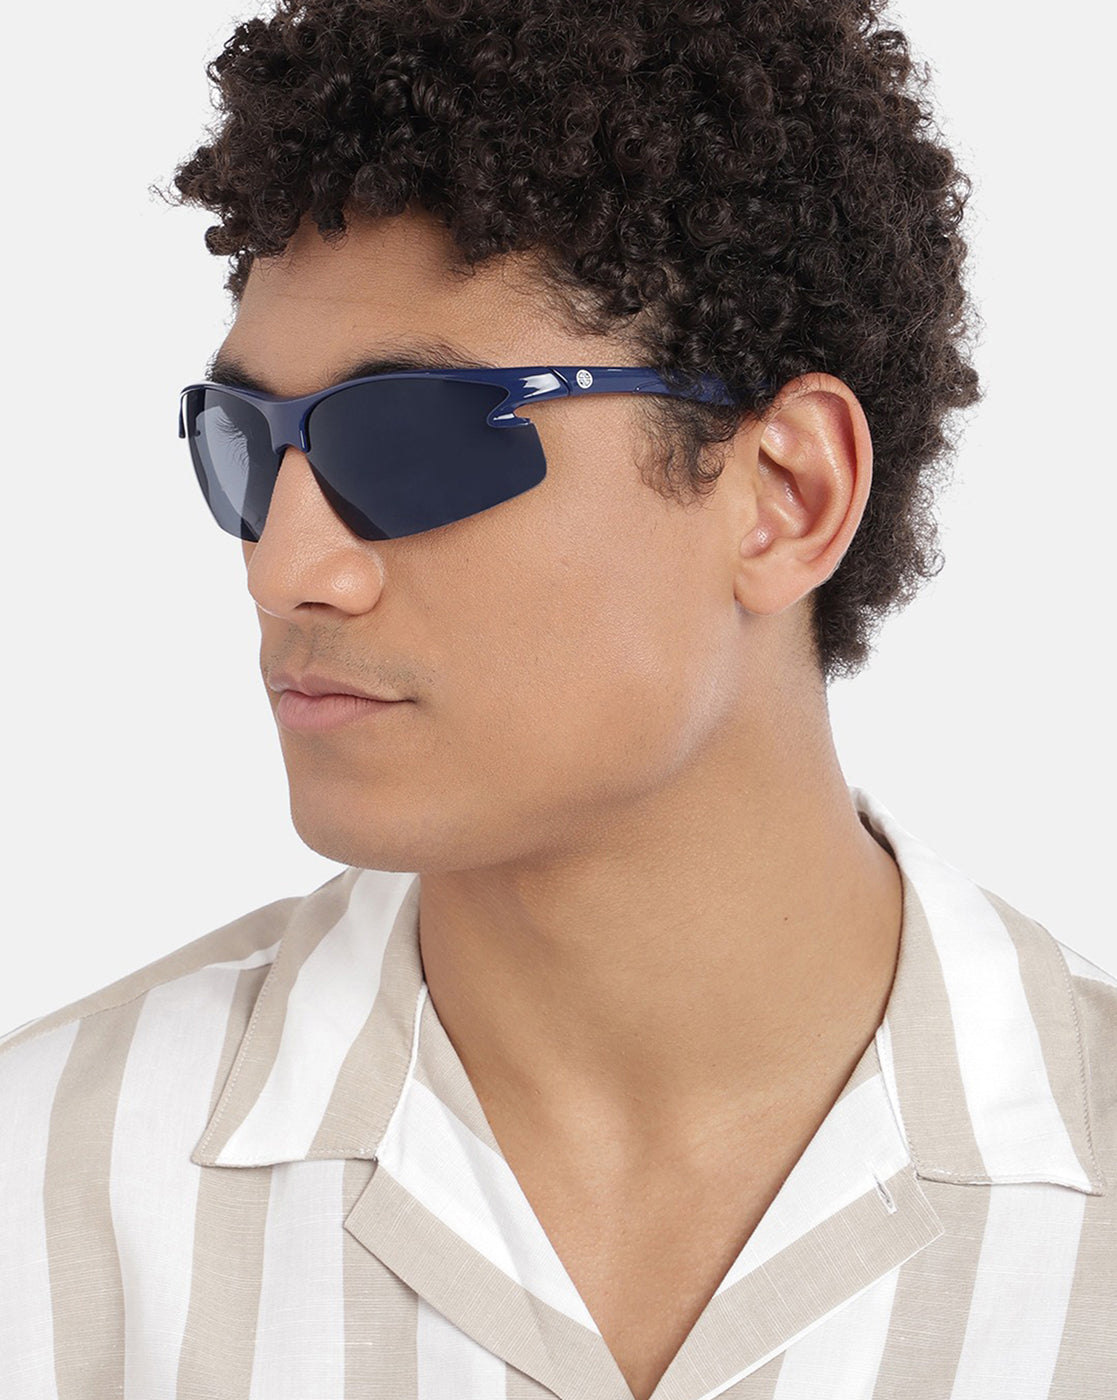 Carlton London Sports Sunglasses With Uv Protected Lens For Men – Carlton  London Online